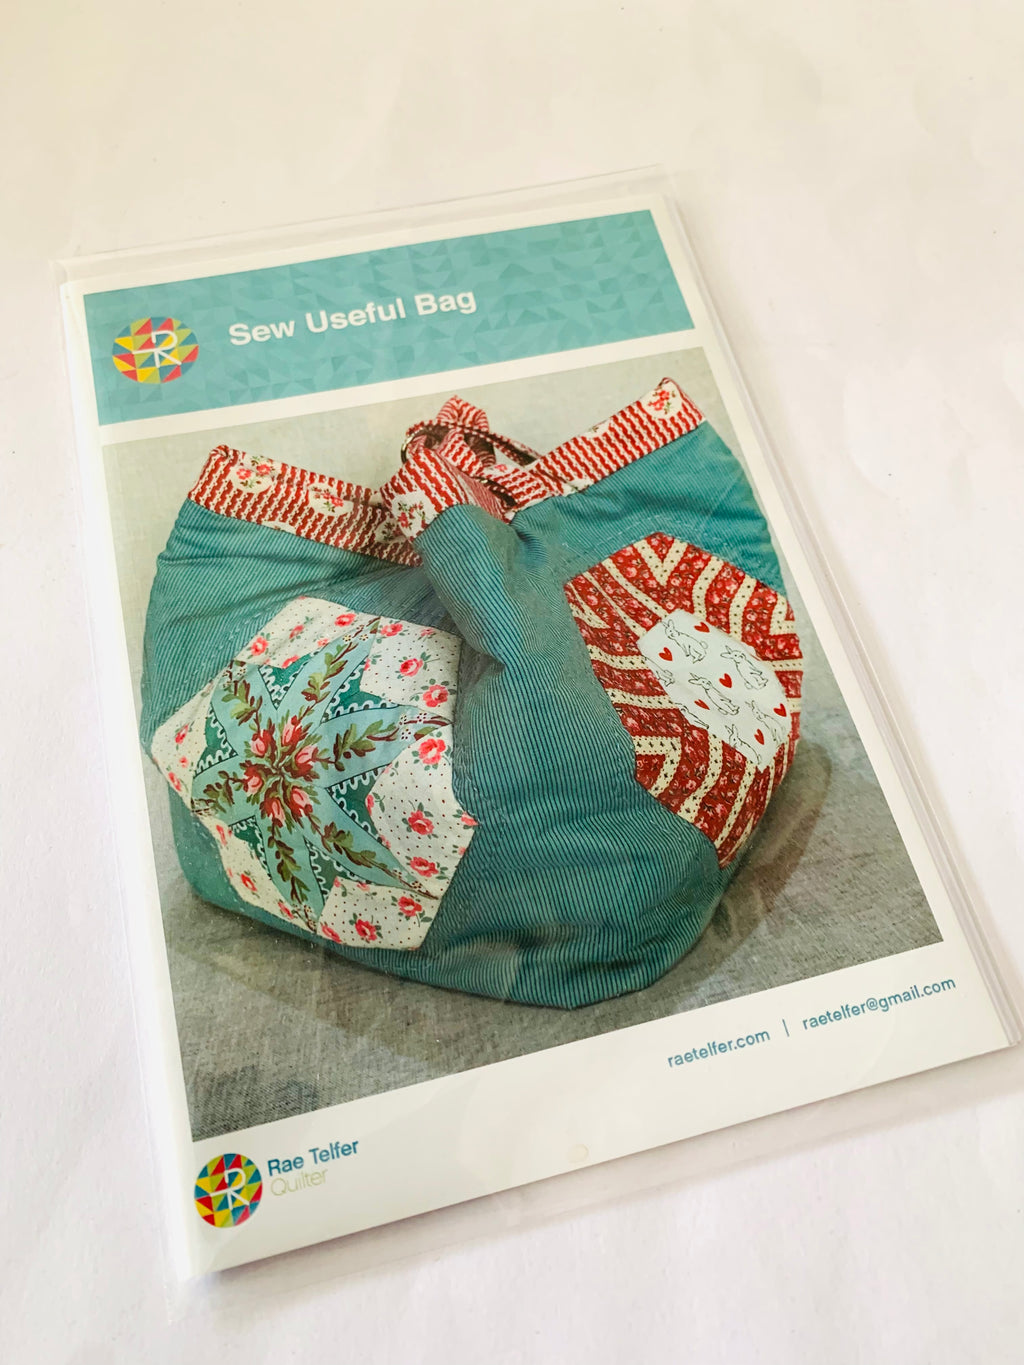 Sew Useful Bag Pattern by Rae Telfer